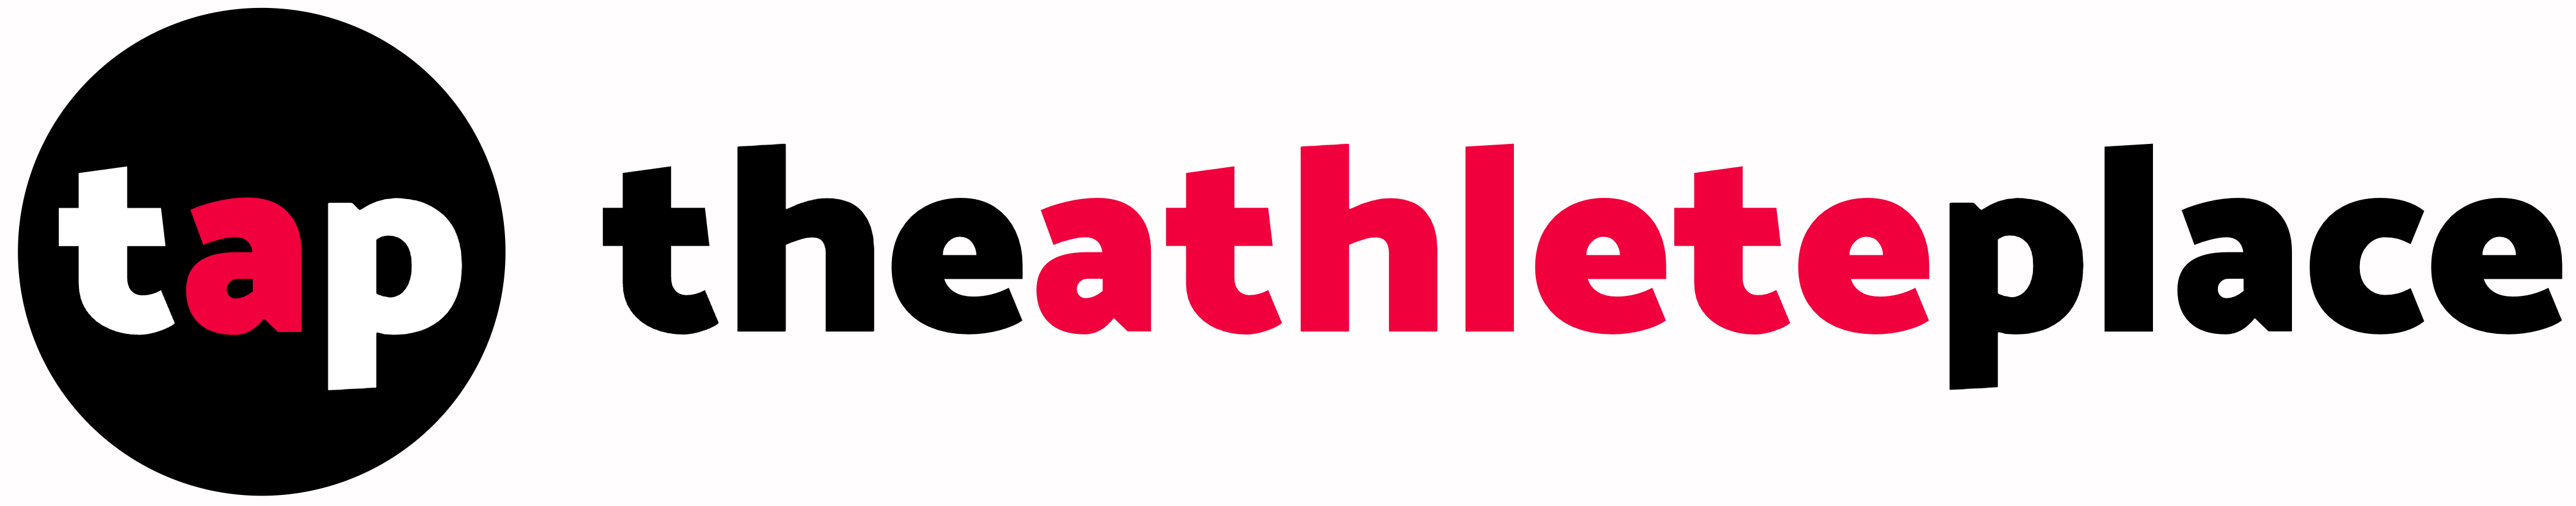 The Athlete Place logo